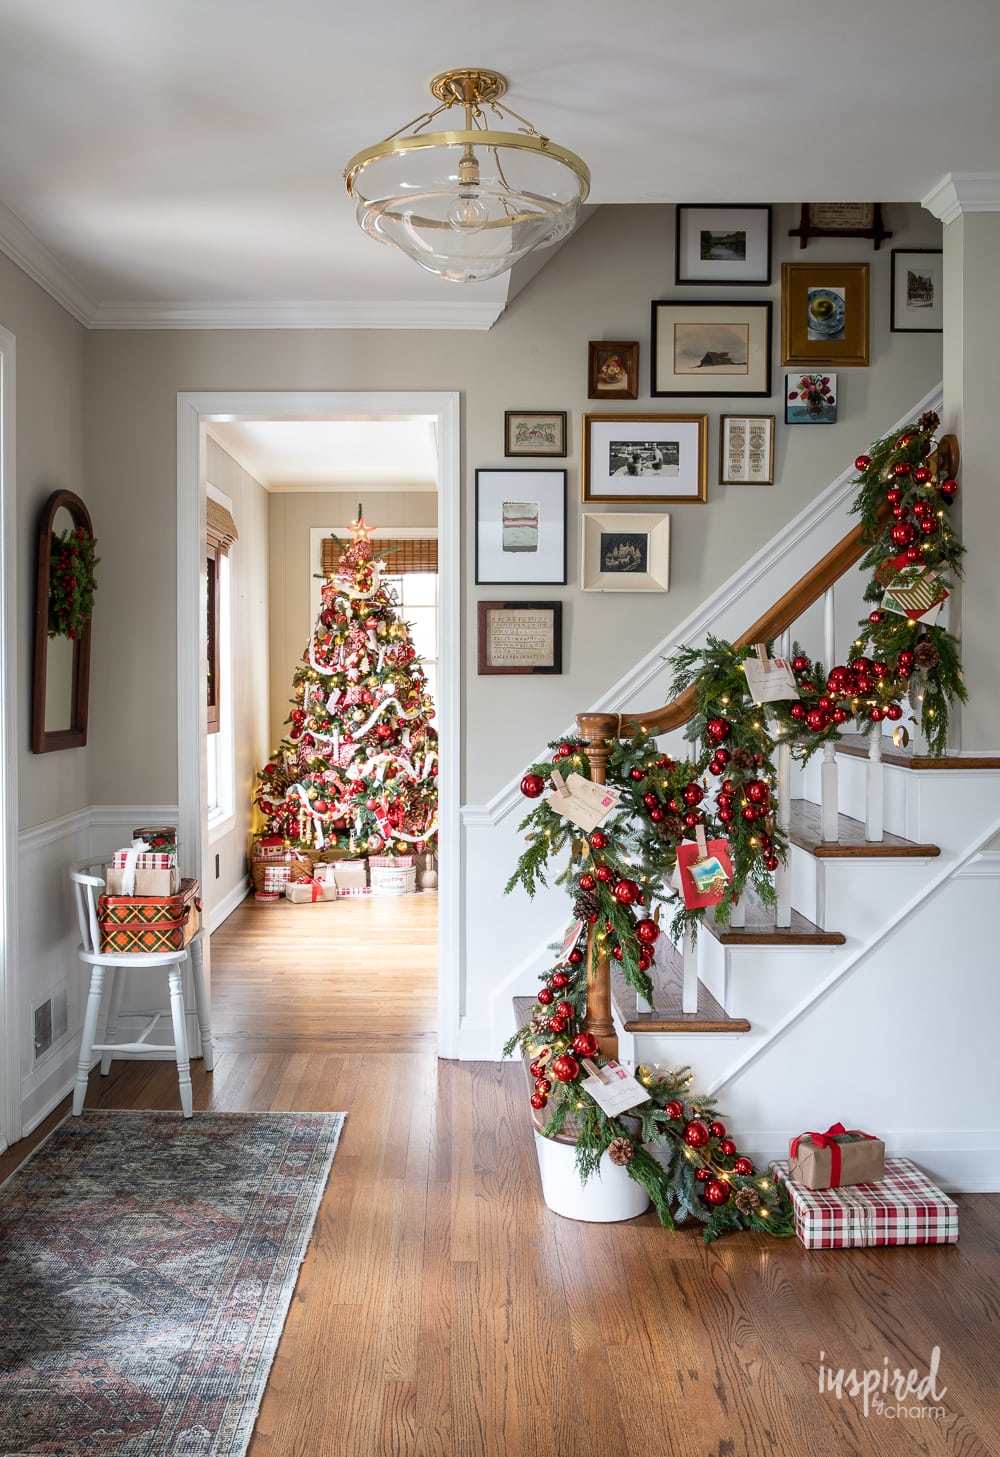 https://inspiredbycharm.com/wp-content/uploads/2021/12/christmas-entryway-decorating.jpg